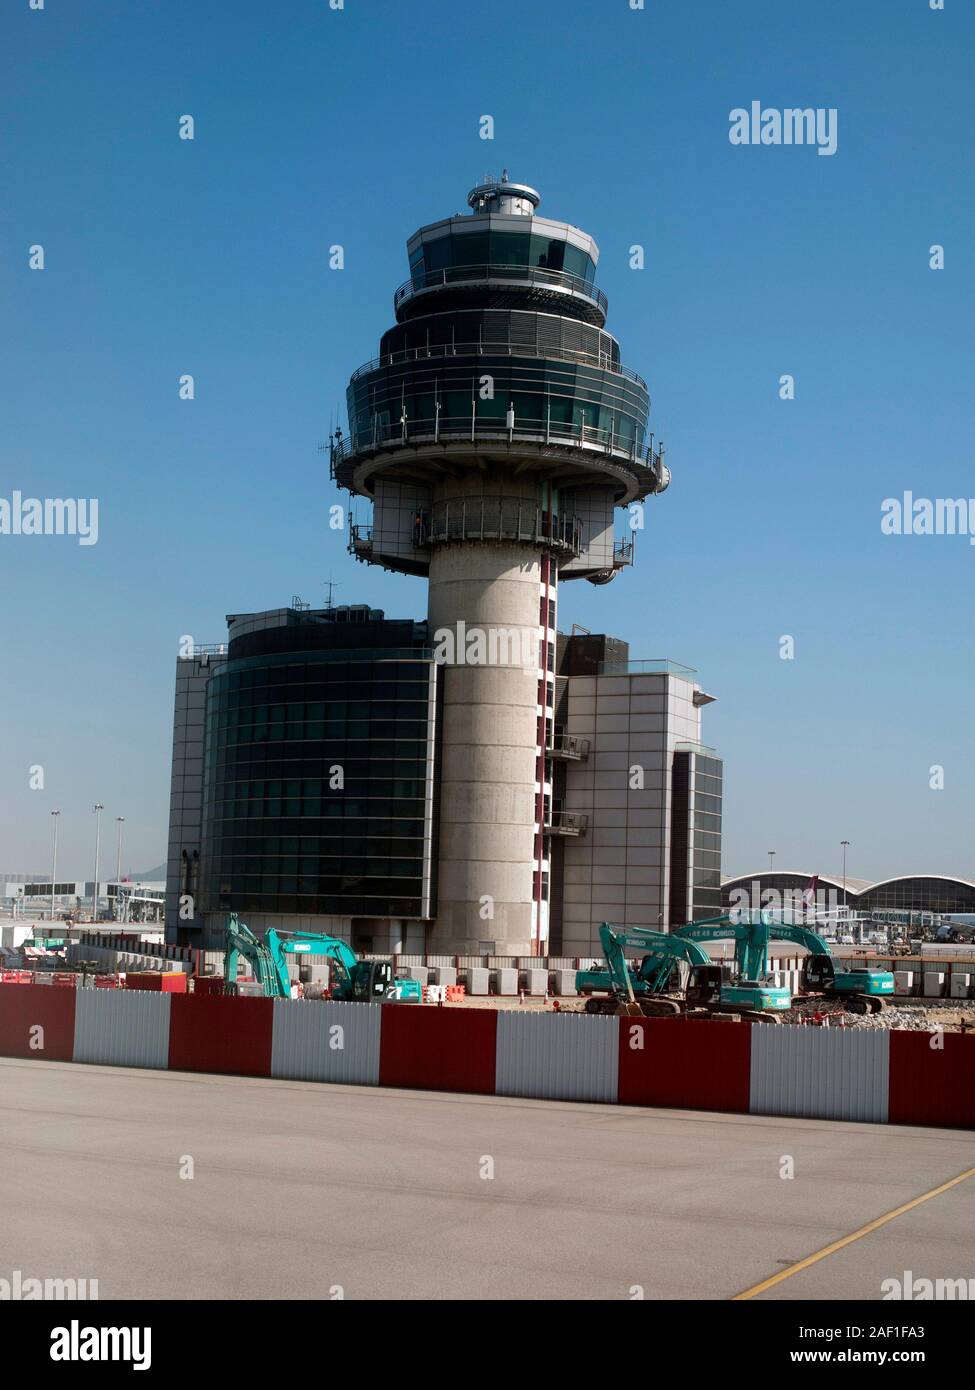 Airport Control Tower at Hong Kong International Airport, China, South East Asia Stock Photo